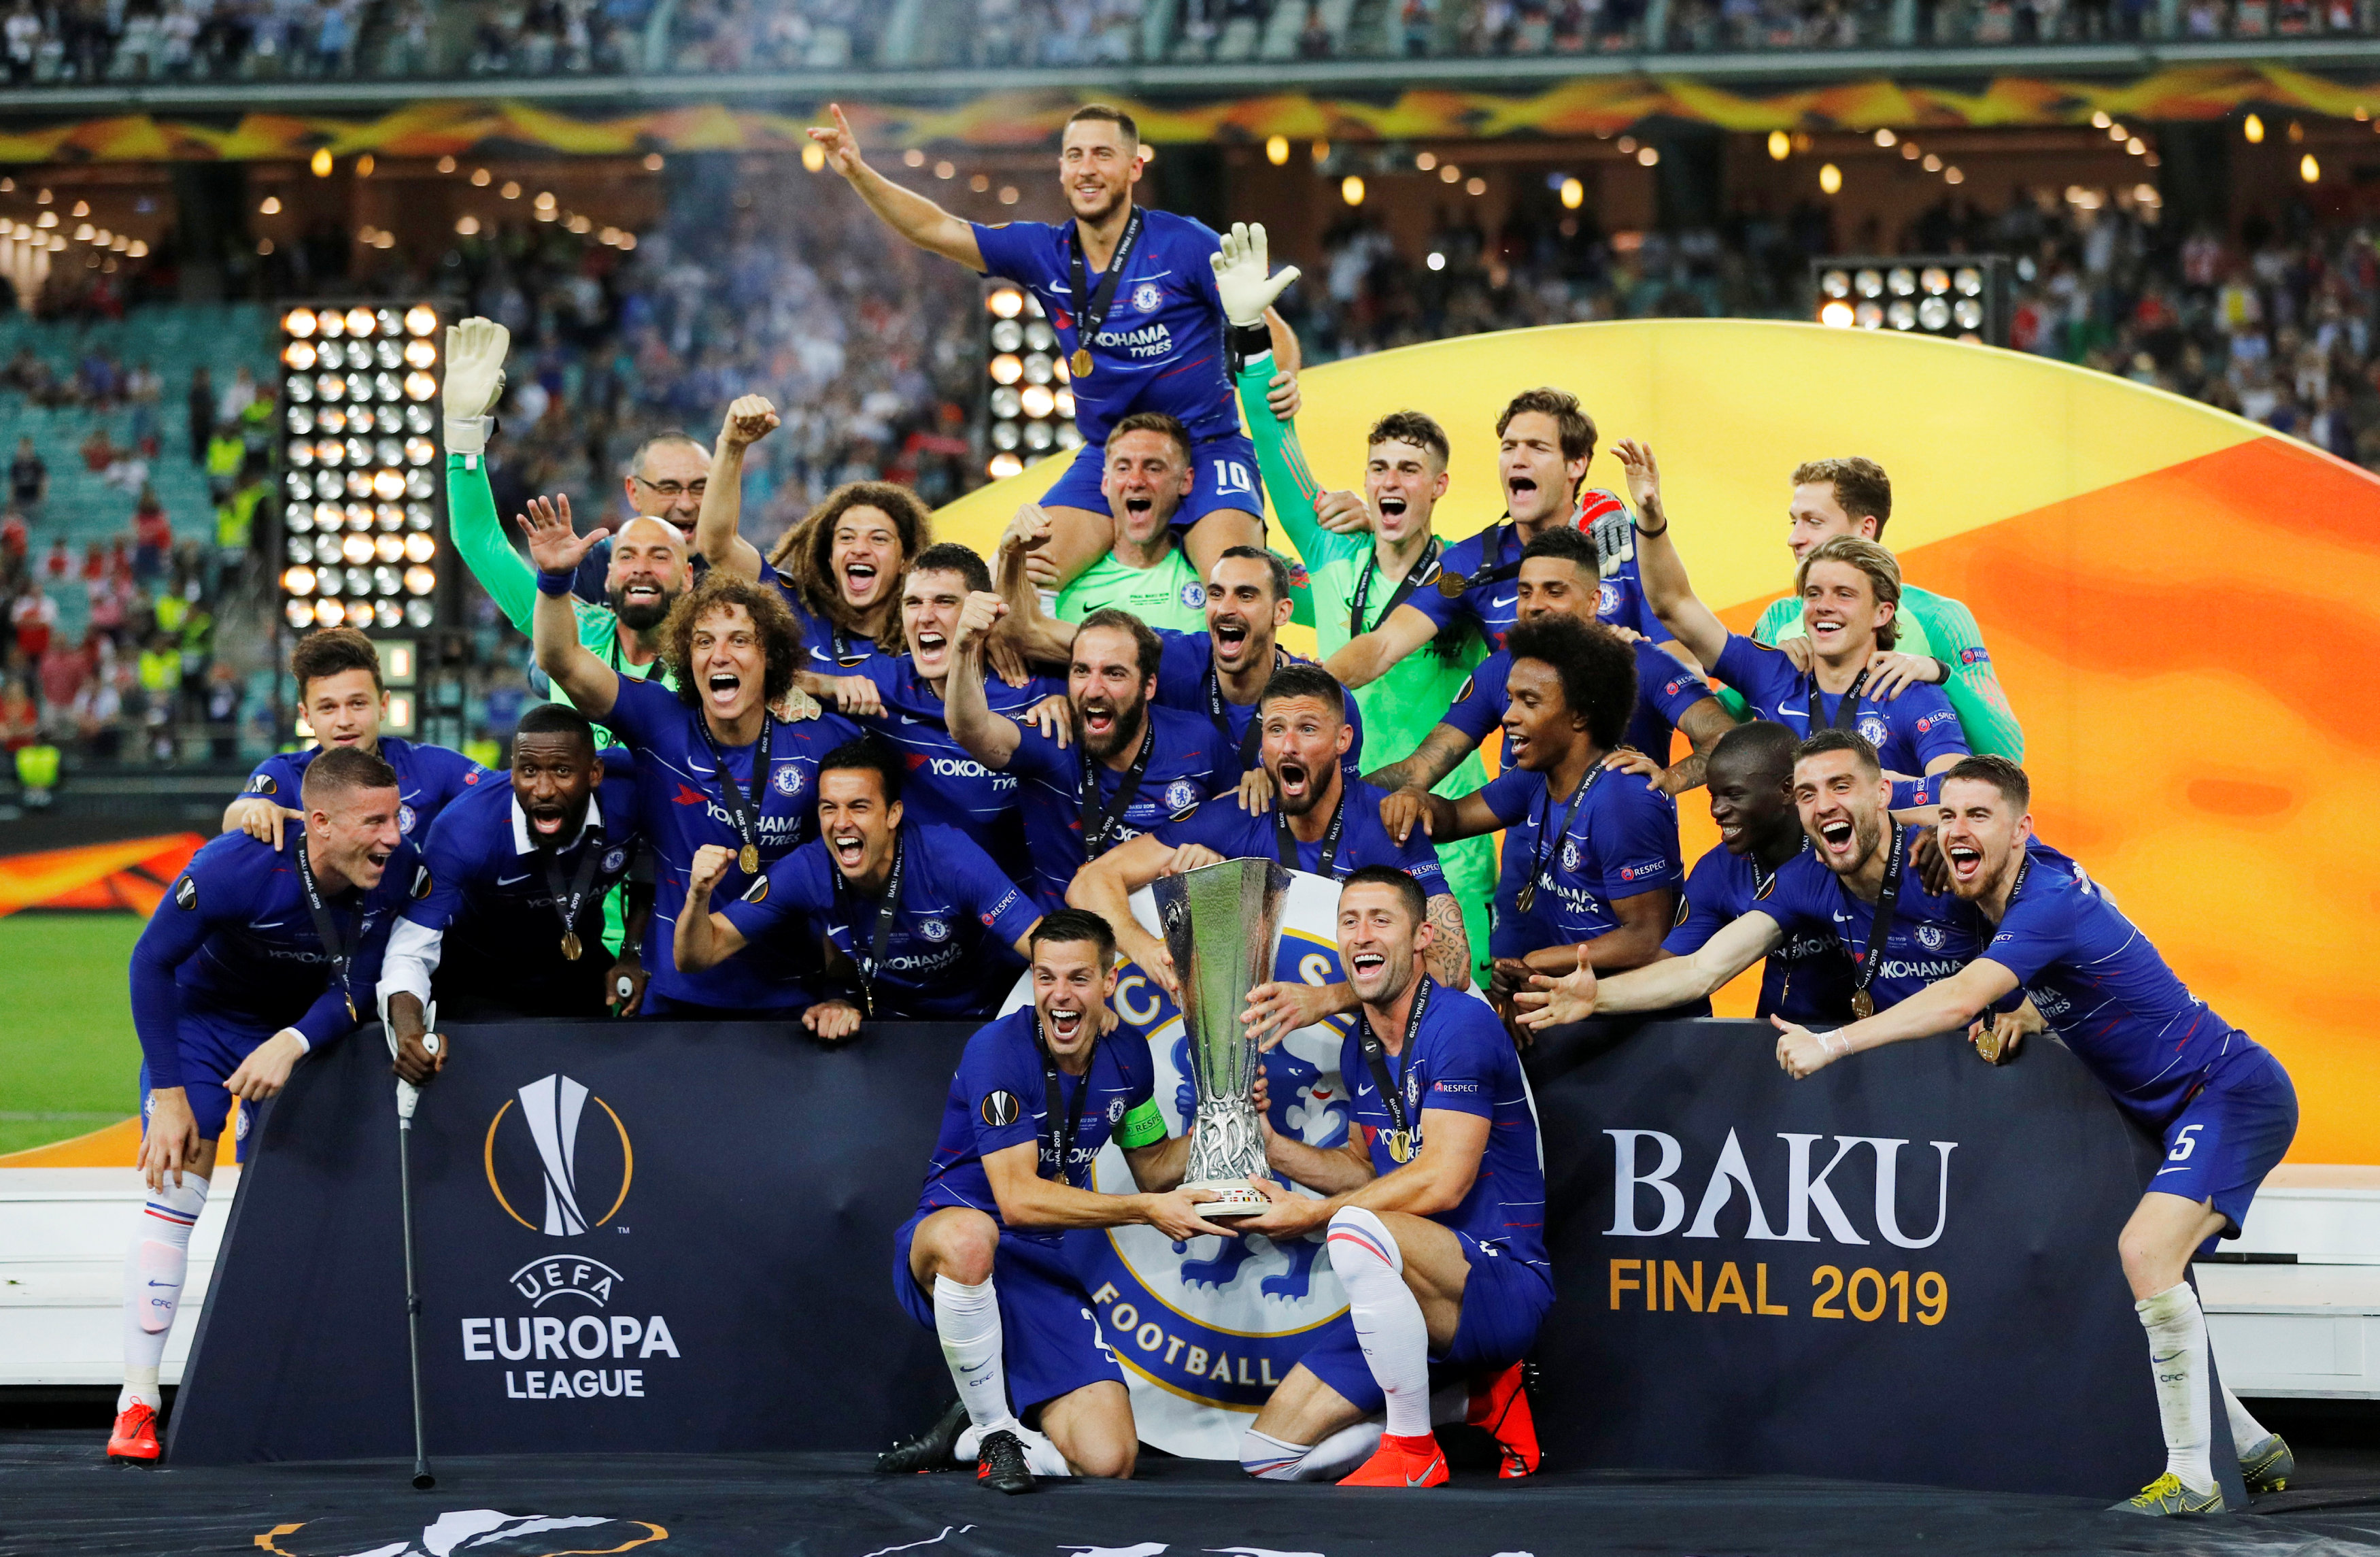 europa league finalists 2019